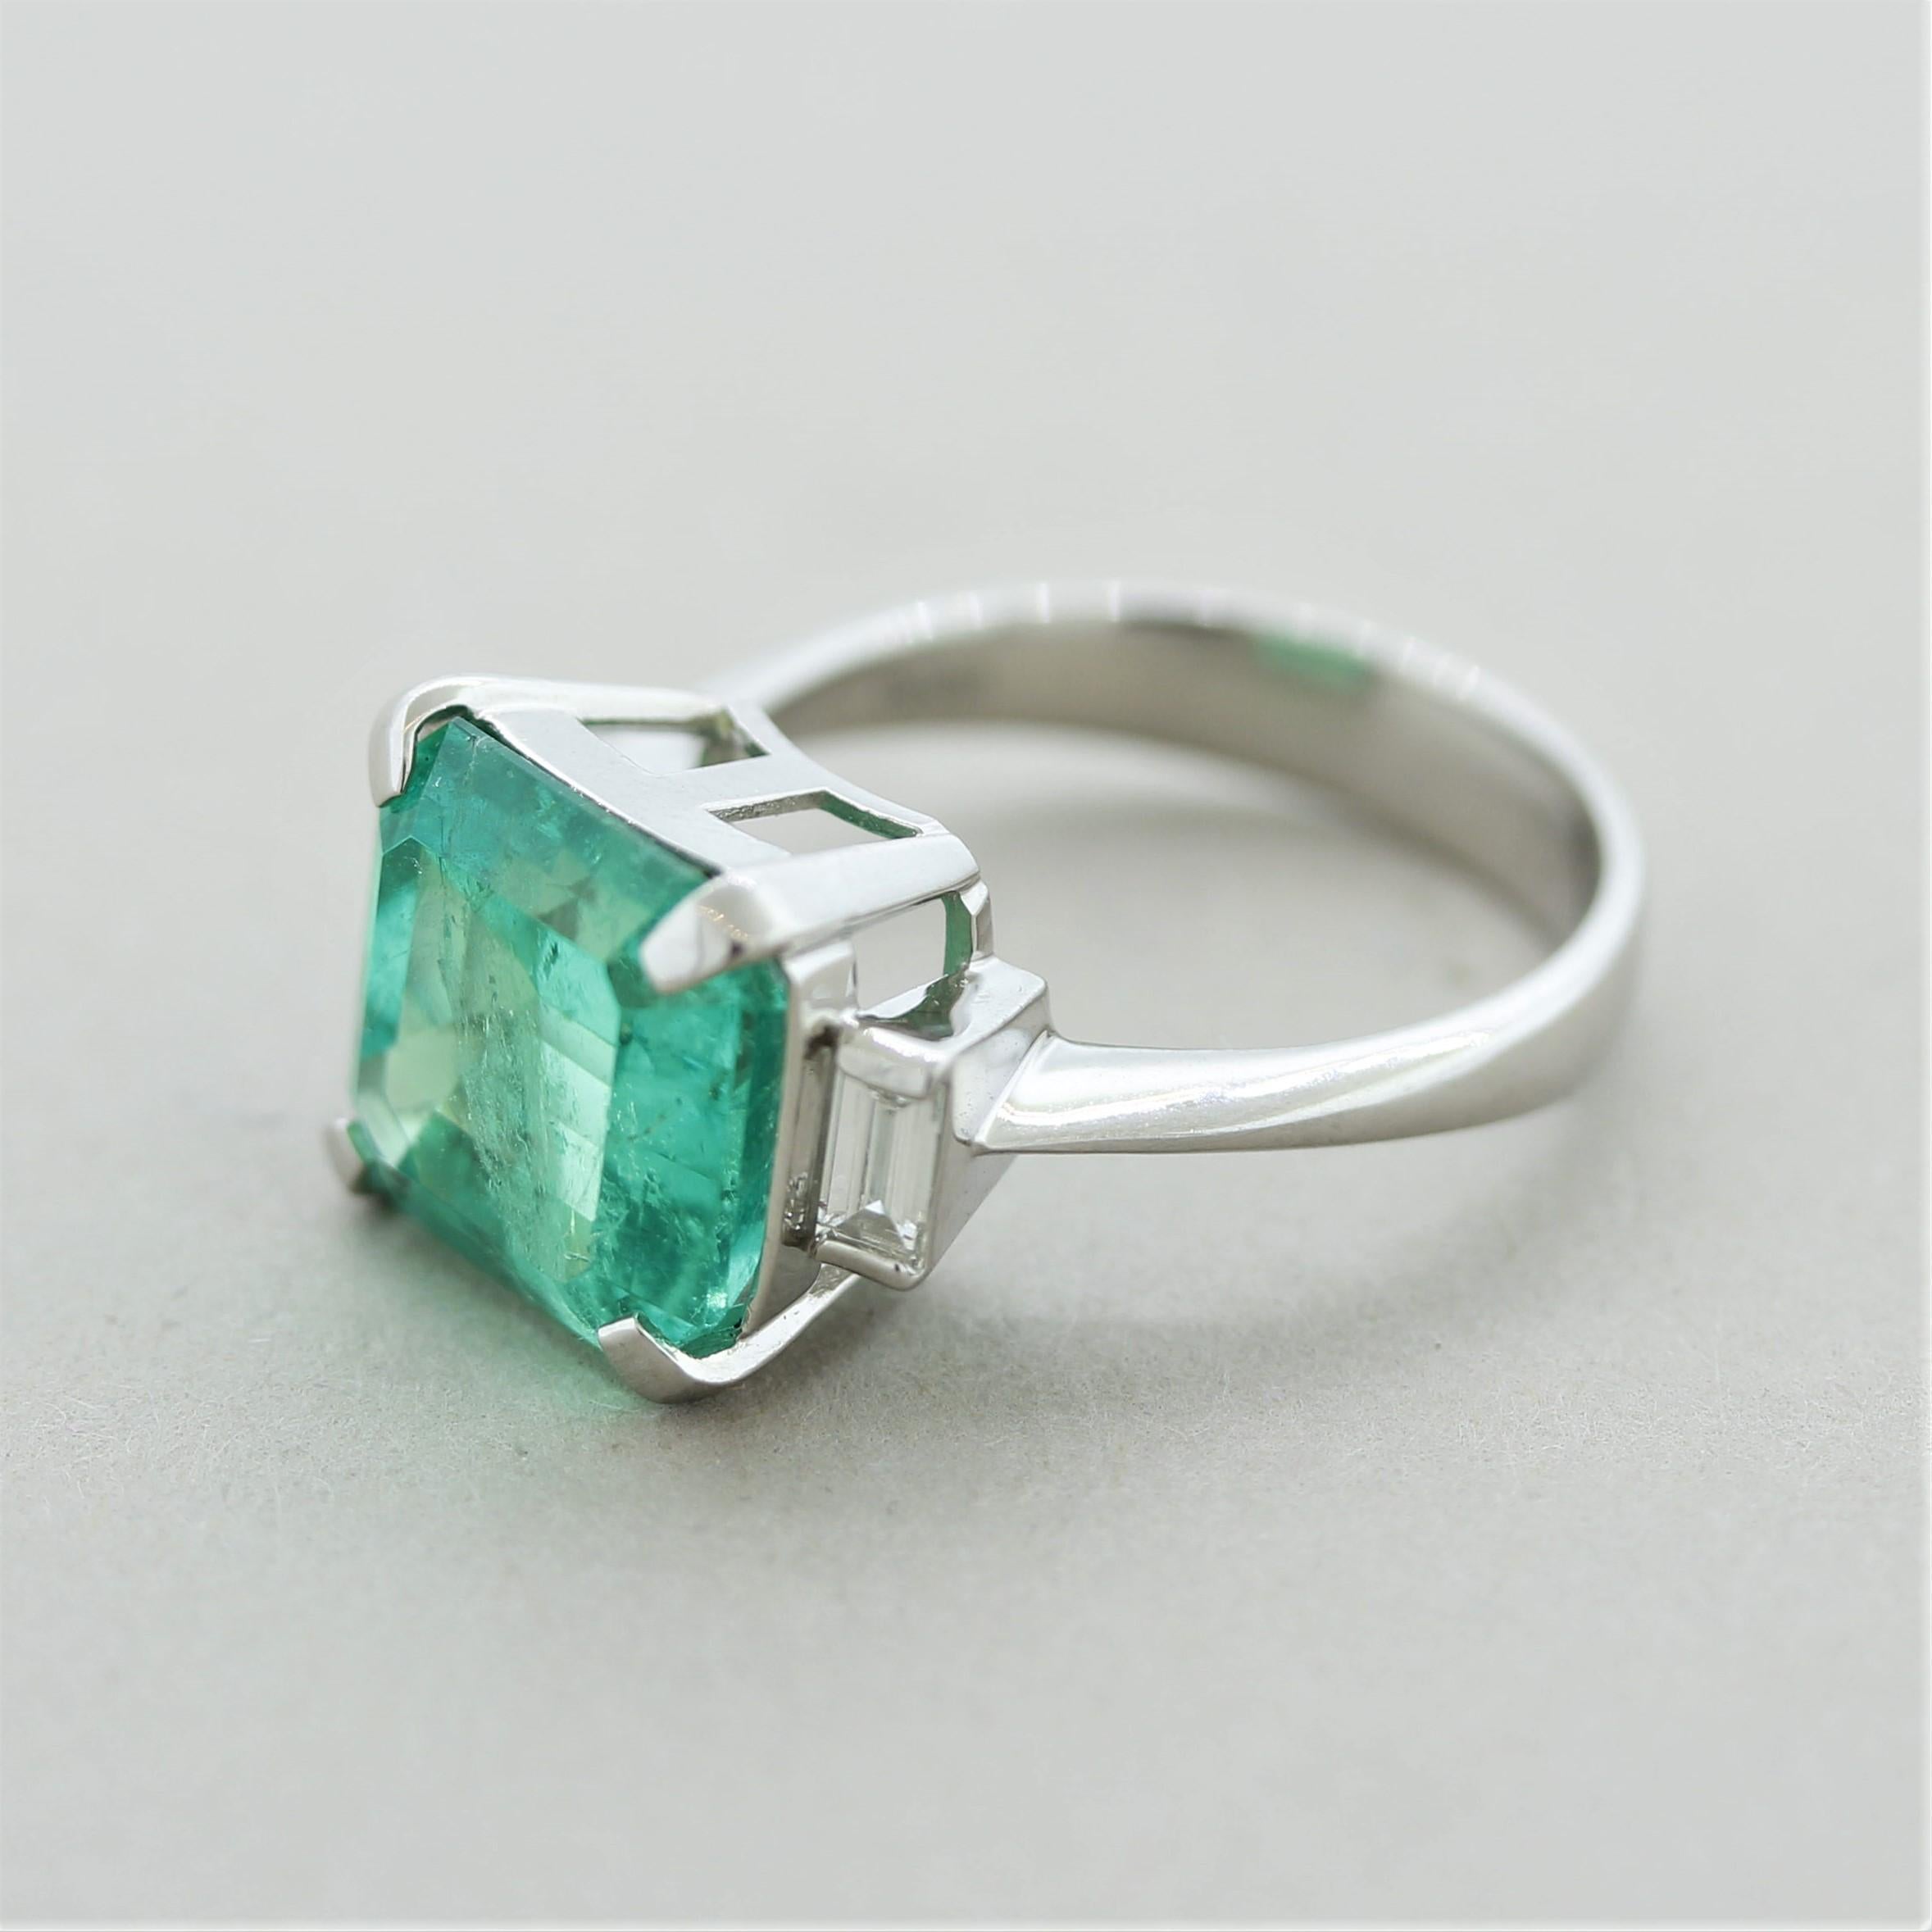 Emerald Cut 5.43 Carat Colombian Emerald Diamond Platinum Ring, GIA Certified For Sale